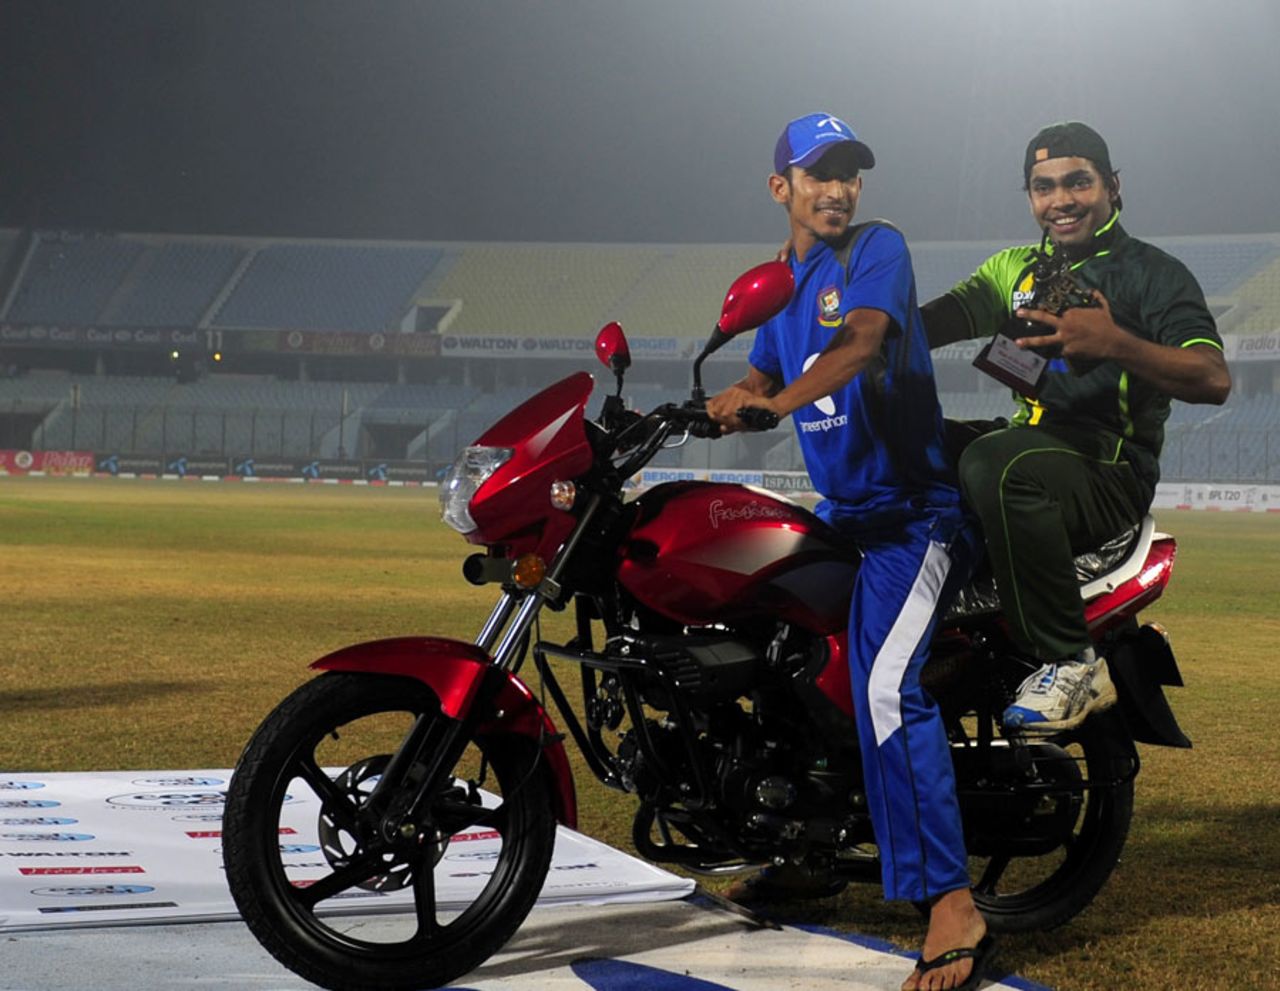 Nasir Hossain gives Umar Akmal a ride on the bike he won as Bangladesh's best player of the series, Bangladesh v Pakistan, 3rd ODI, Chittagong, December 6, 2011 